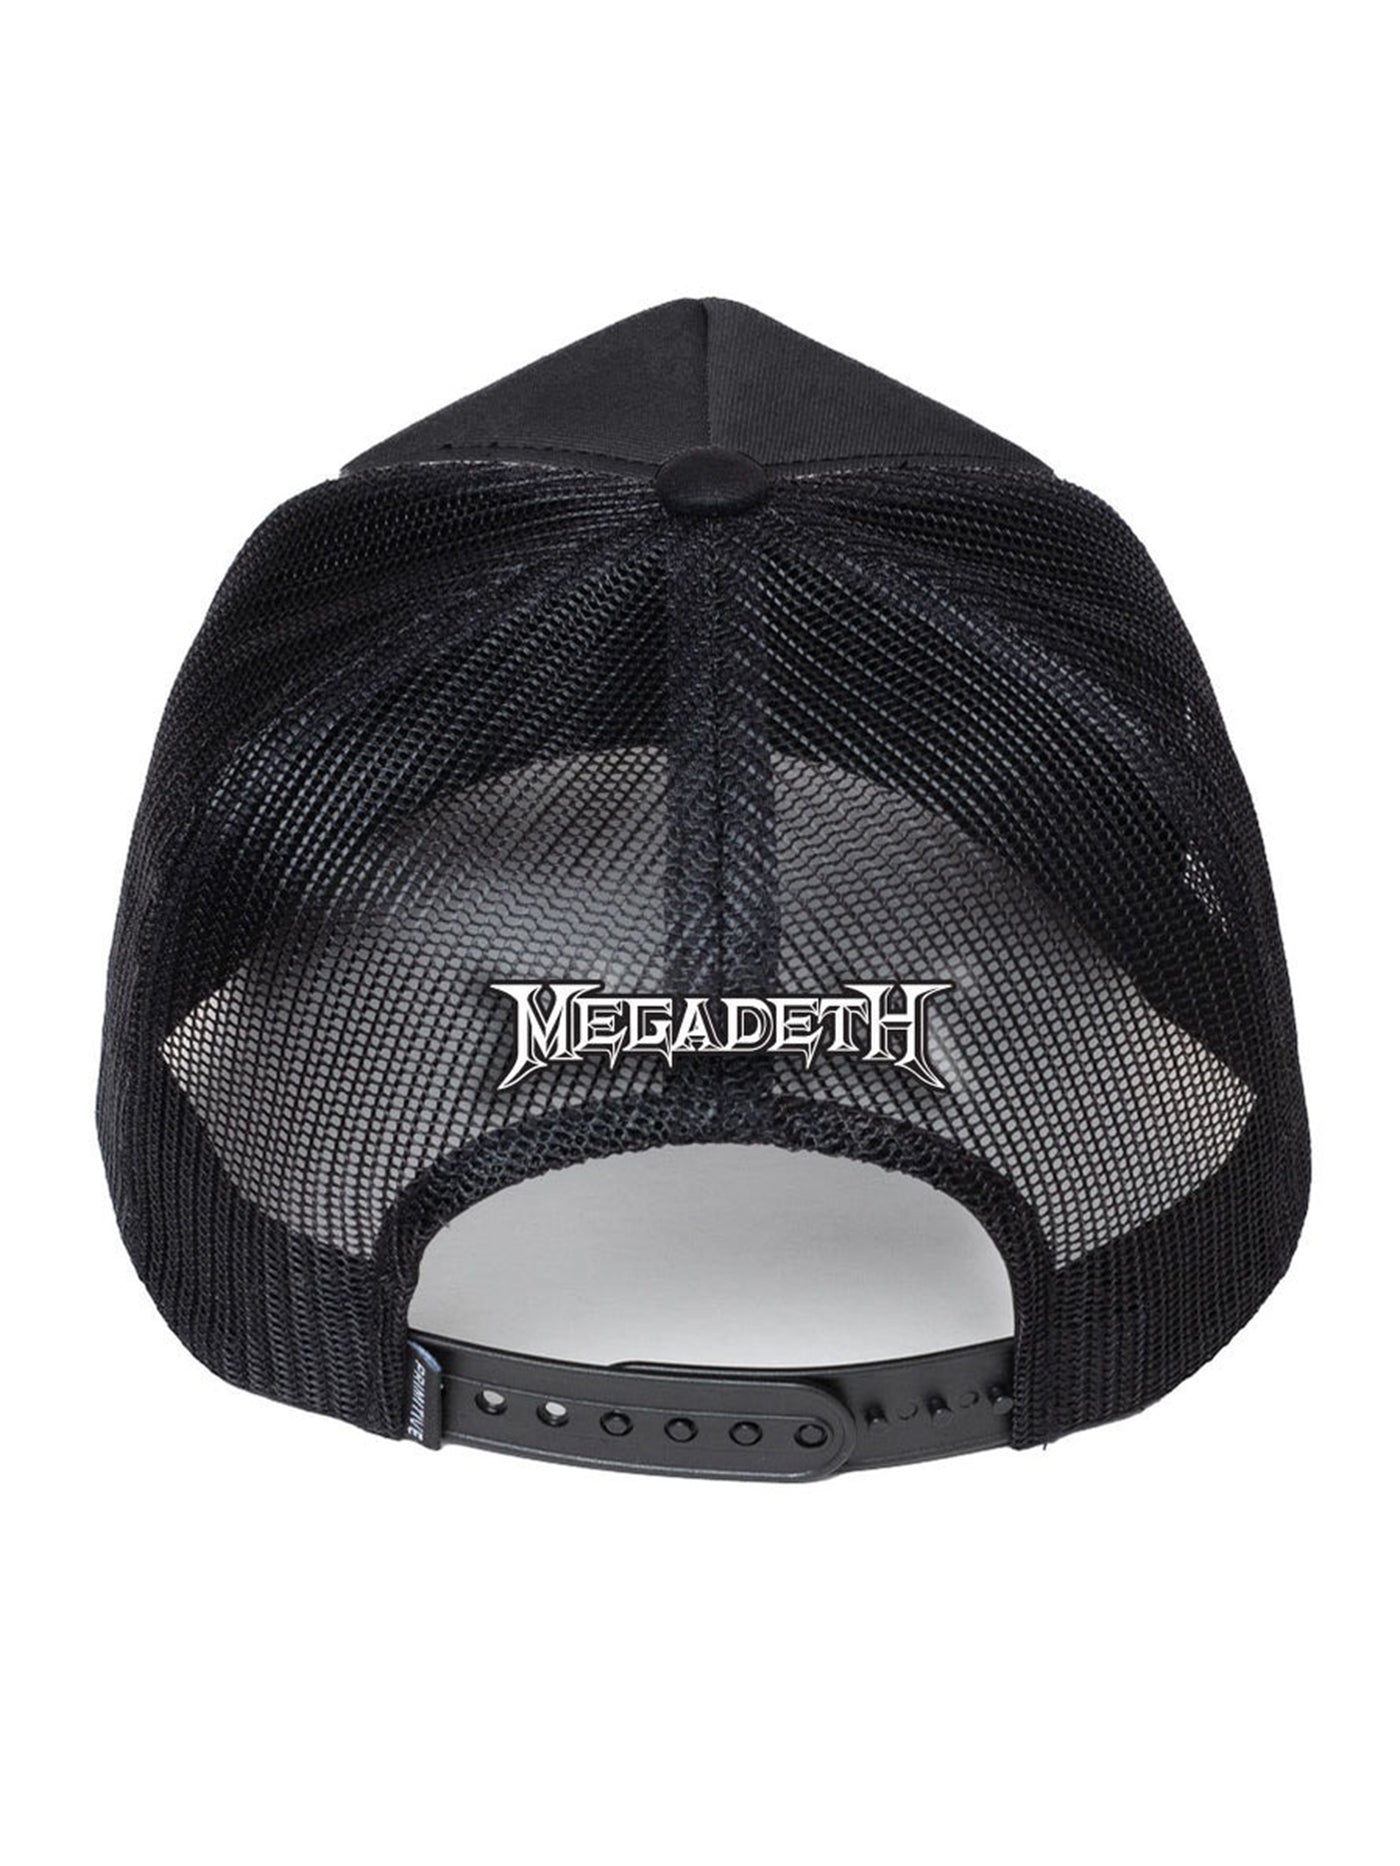 Primitive x Megadeth Birth Trucker Hat